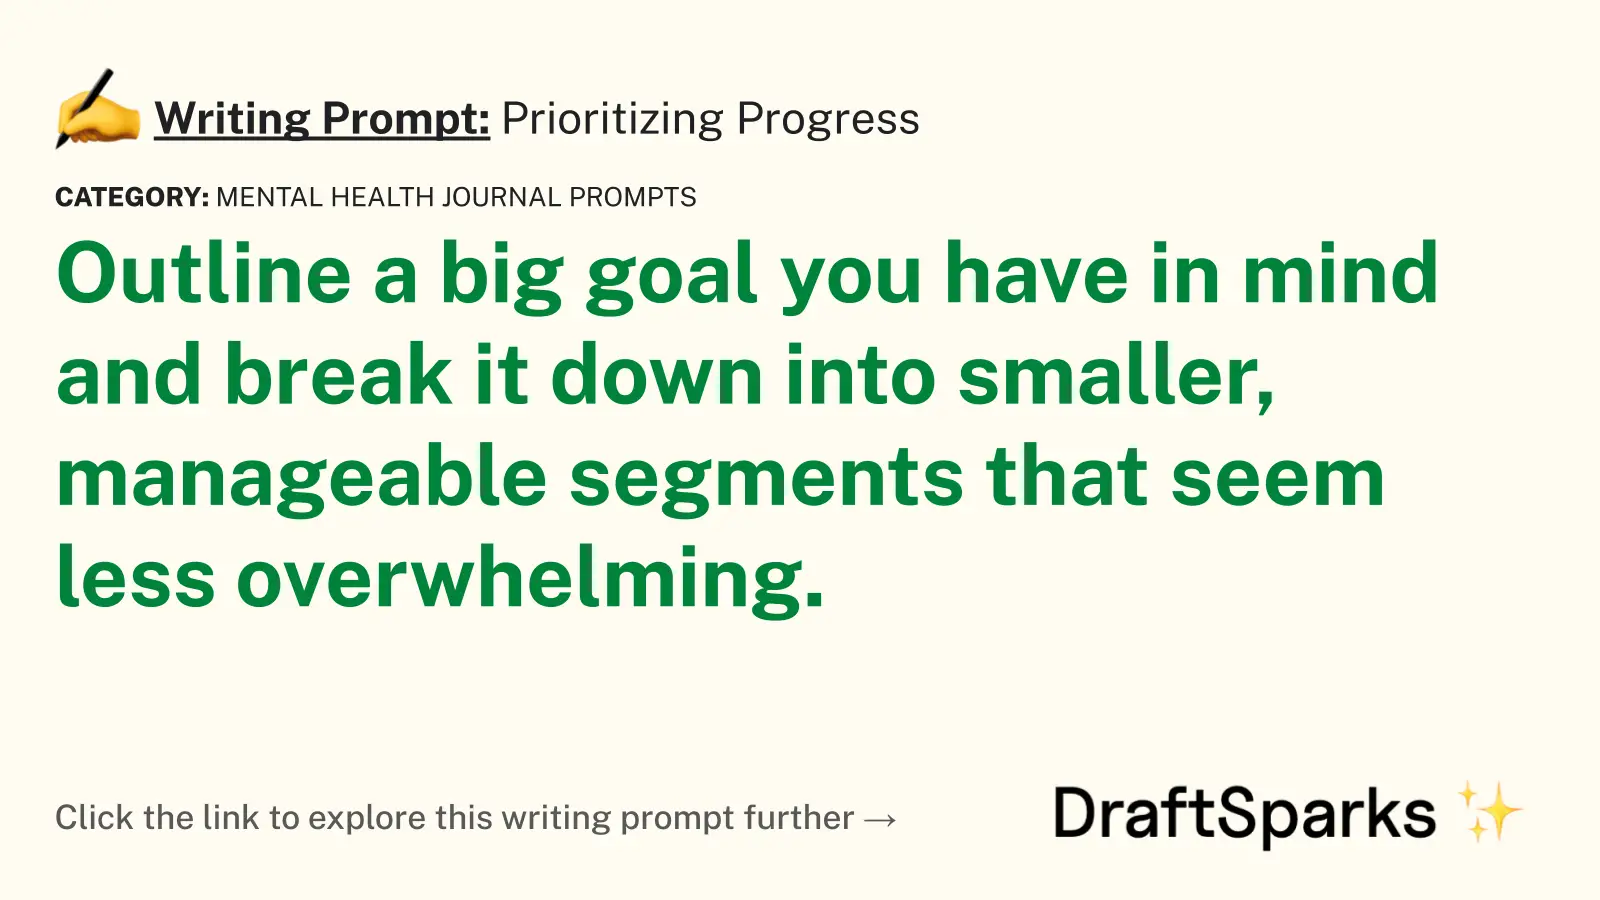 Prioritizing Progress